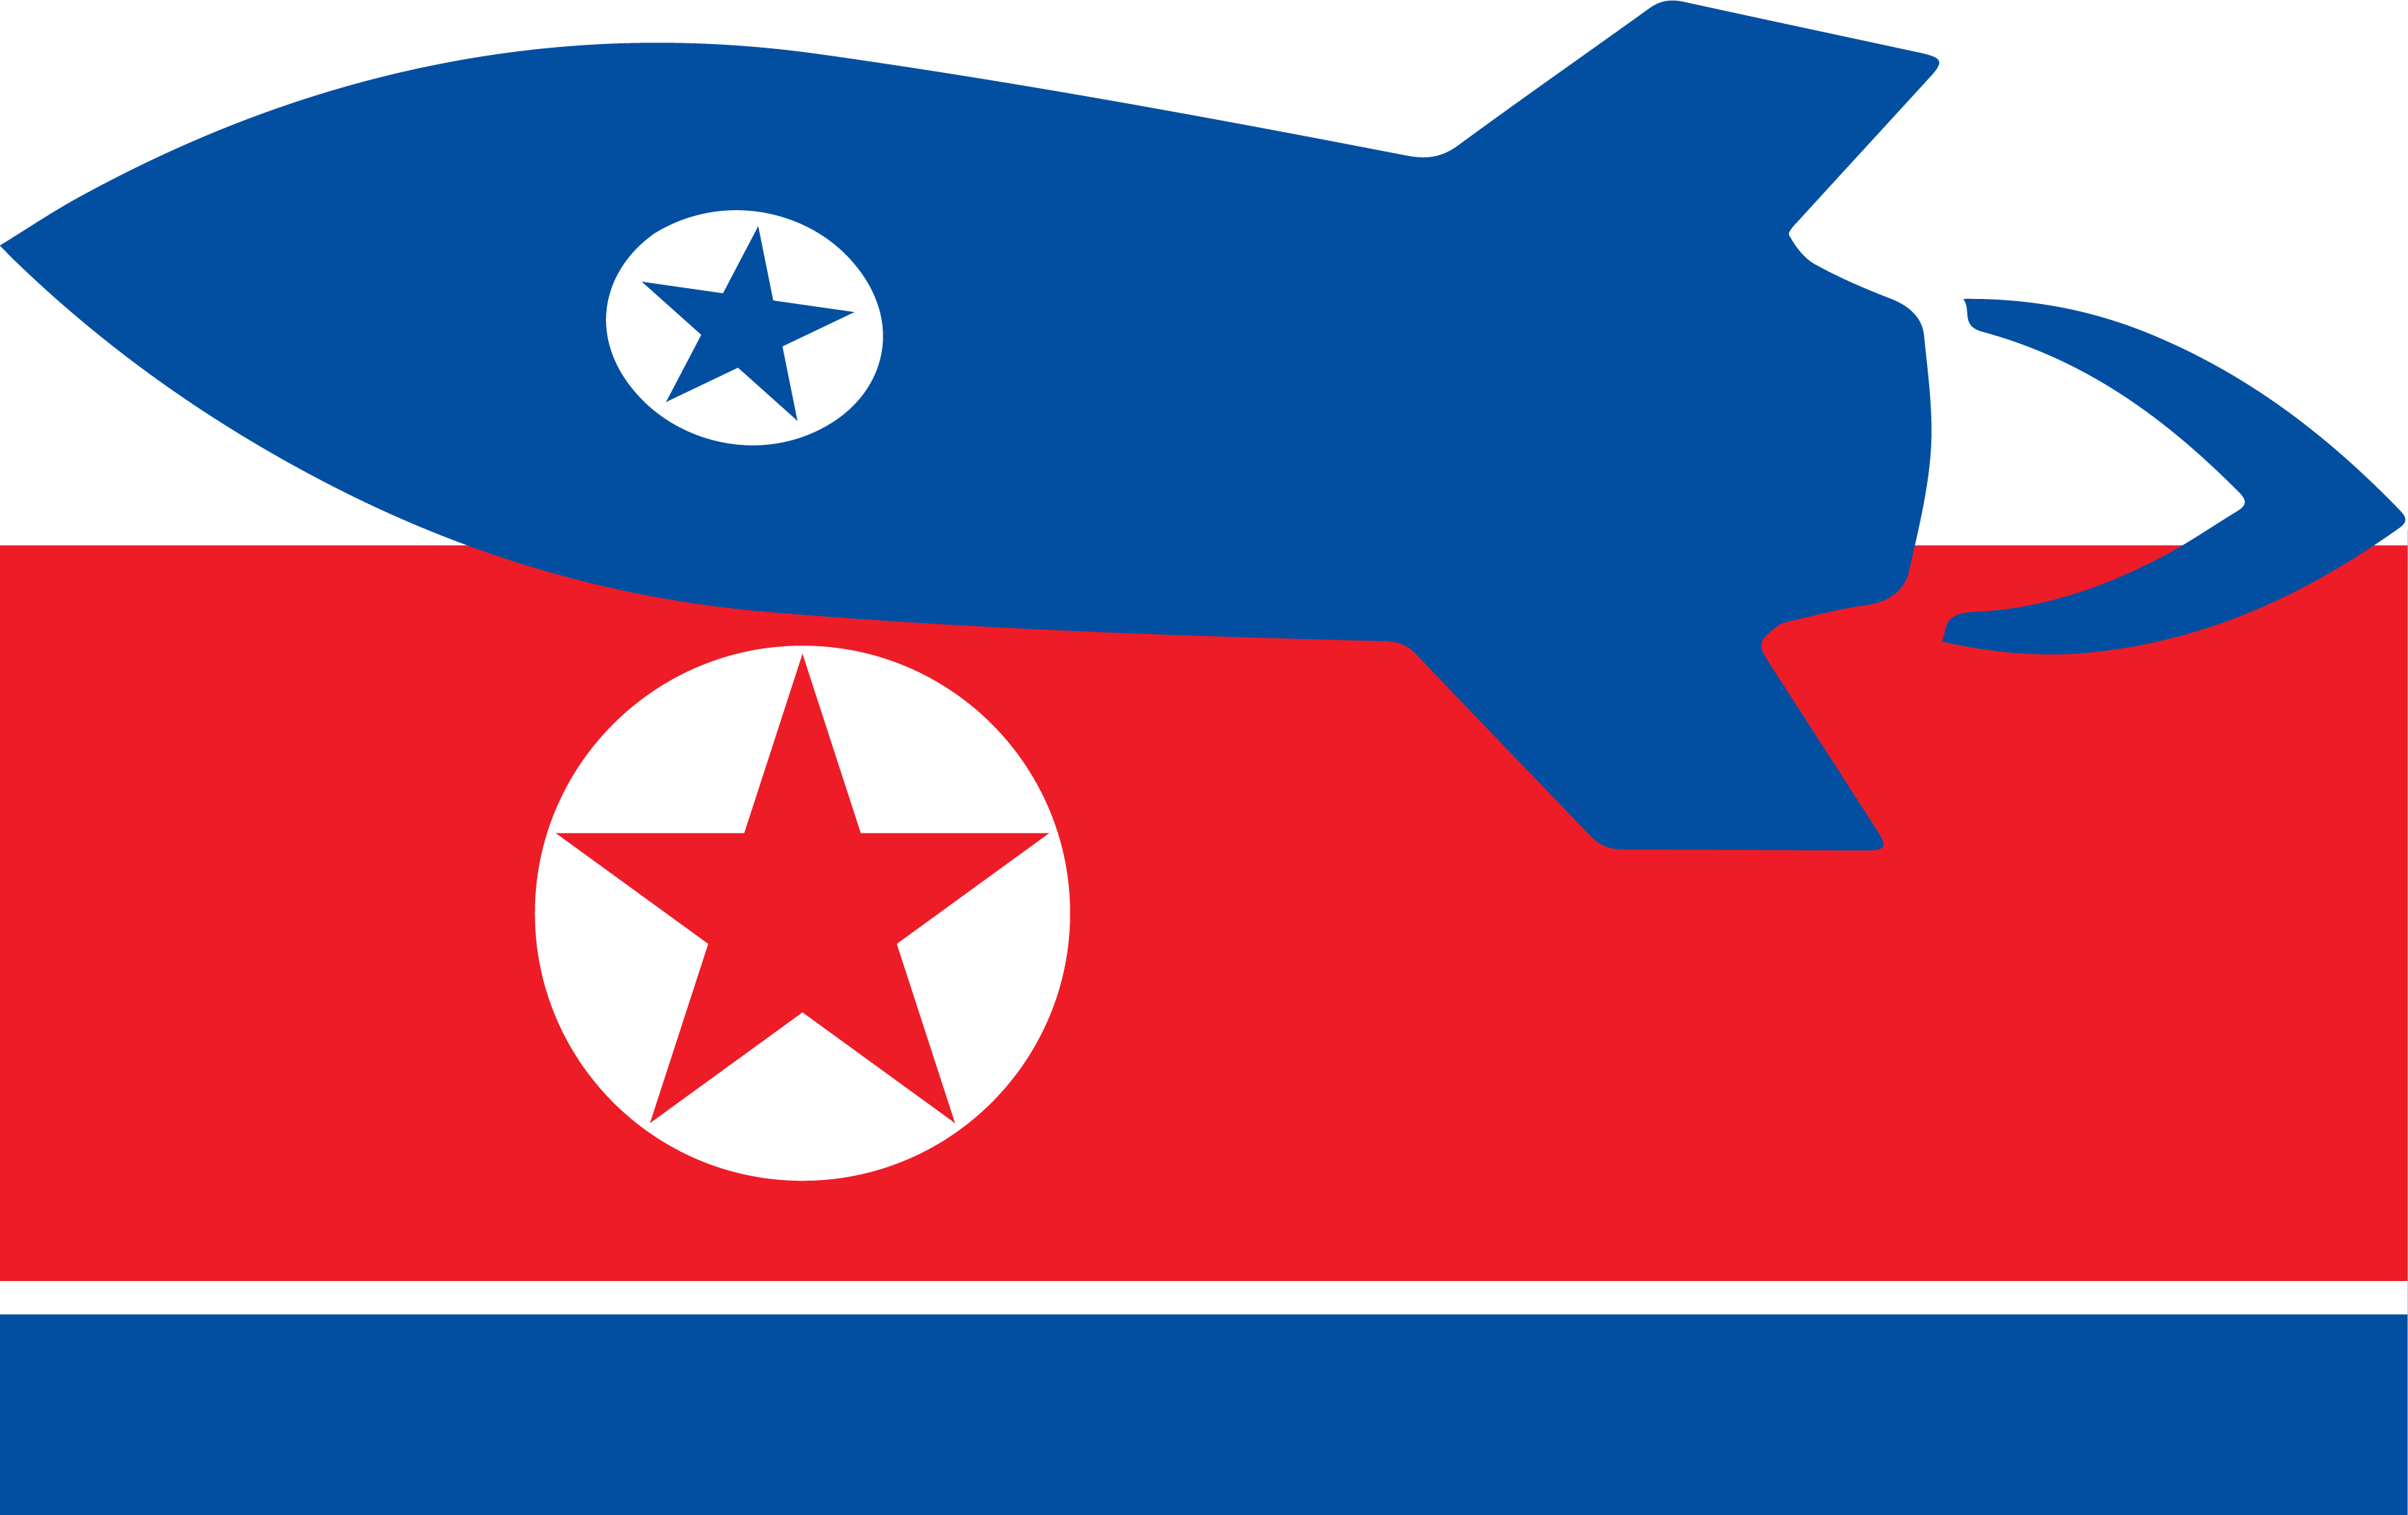 Flag_of_North_Korea_Nordkorea_Flagge_Kriegsflagge_Raketenstreit_Raketentest